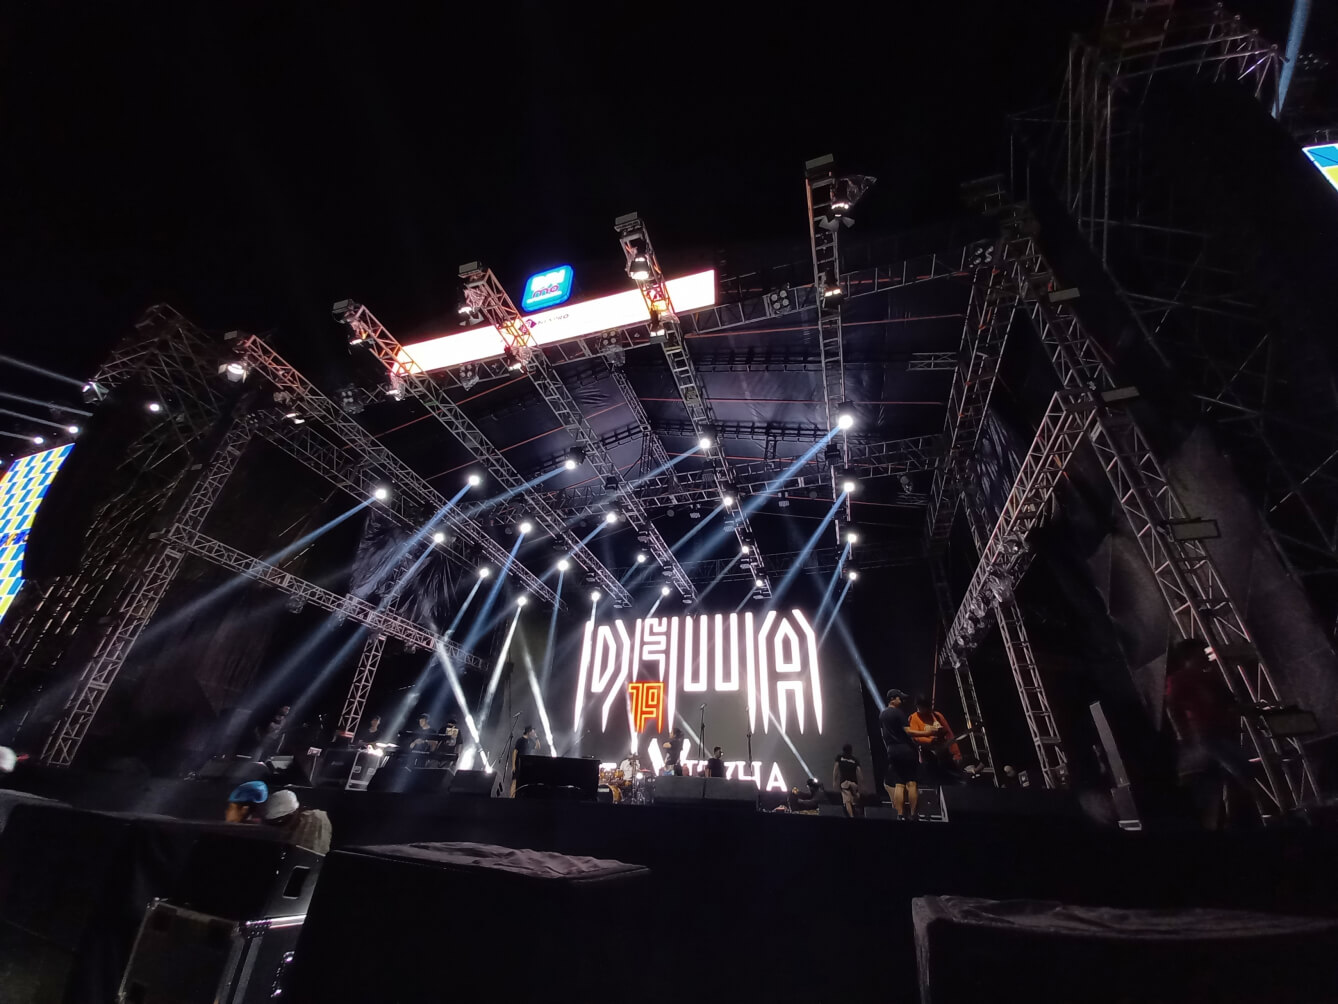 Malam ini Dewa 19 Konser Spektakuler di Lanud Wiriadinata Kota Tasikmalaya